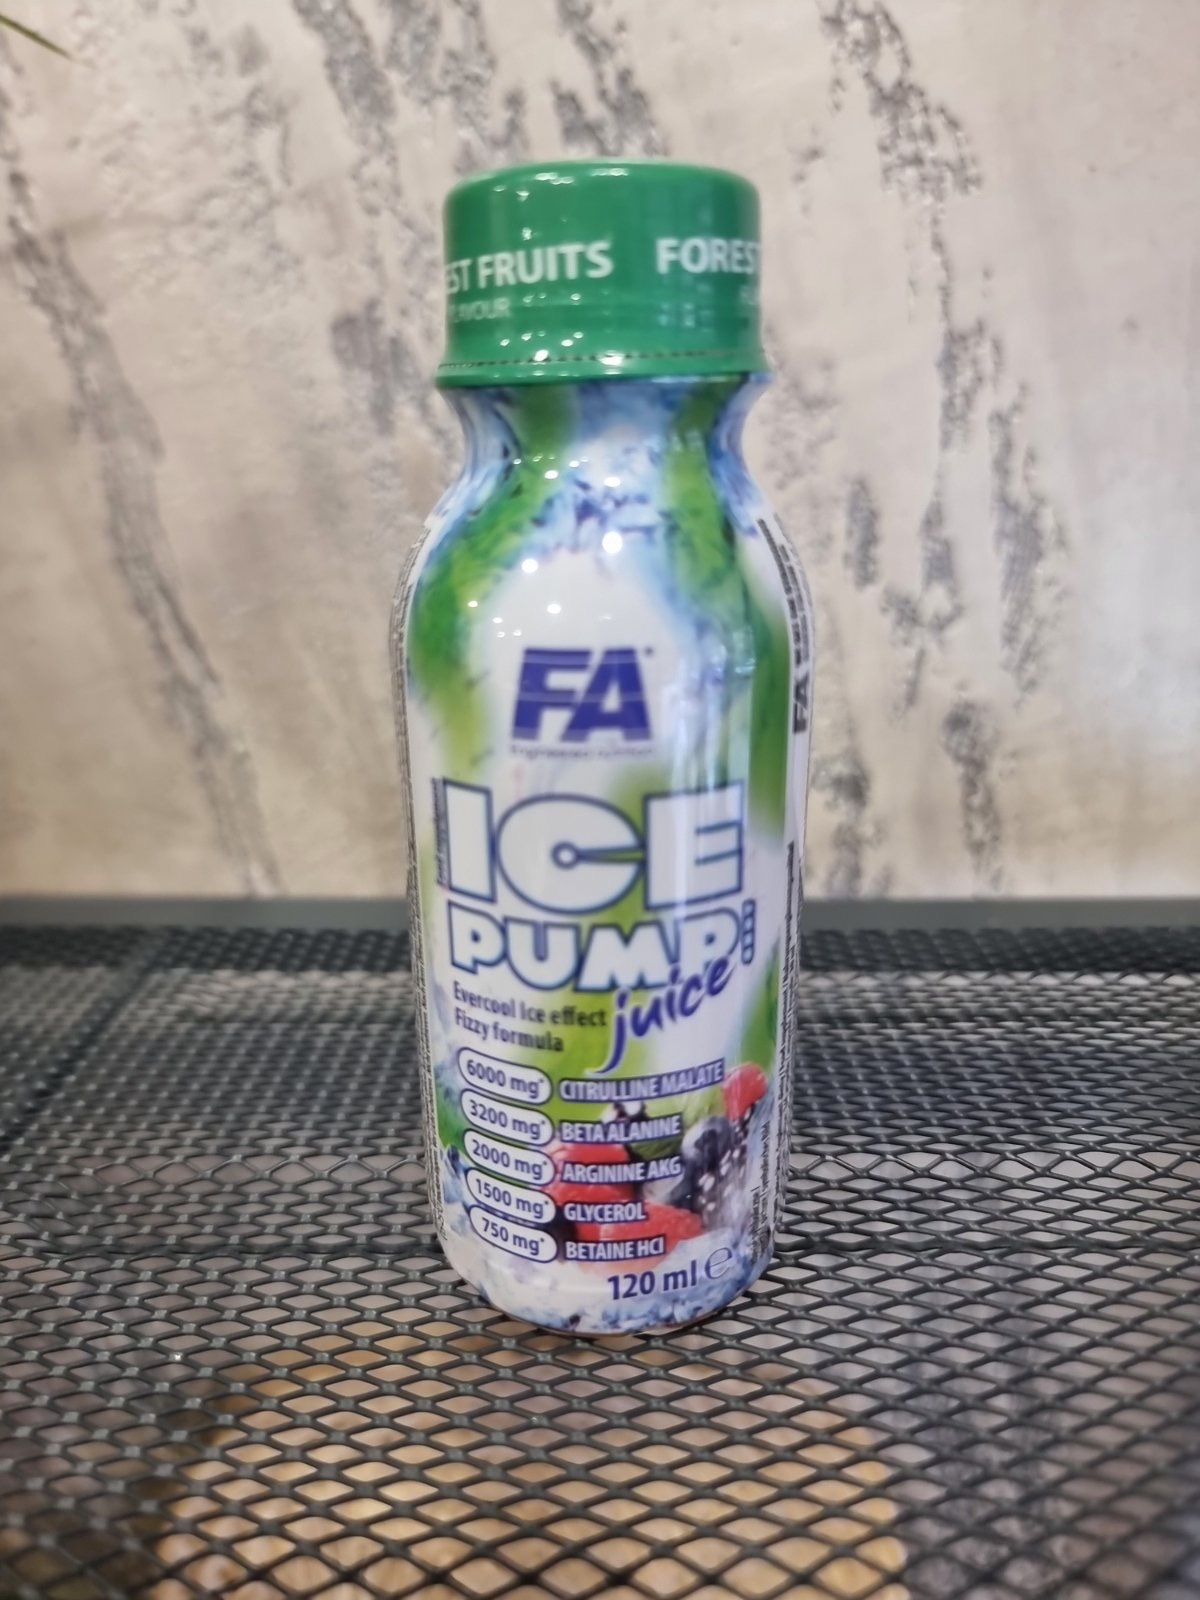 FA Ice pump 120mл.